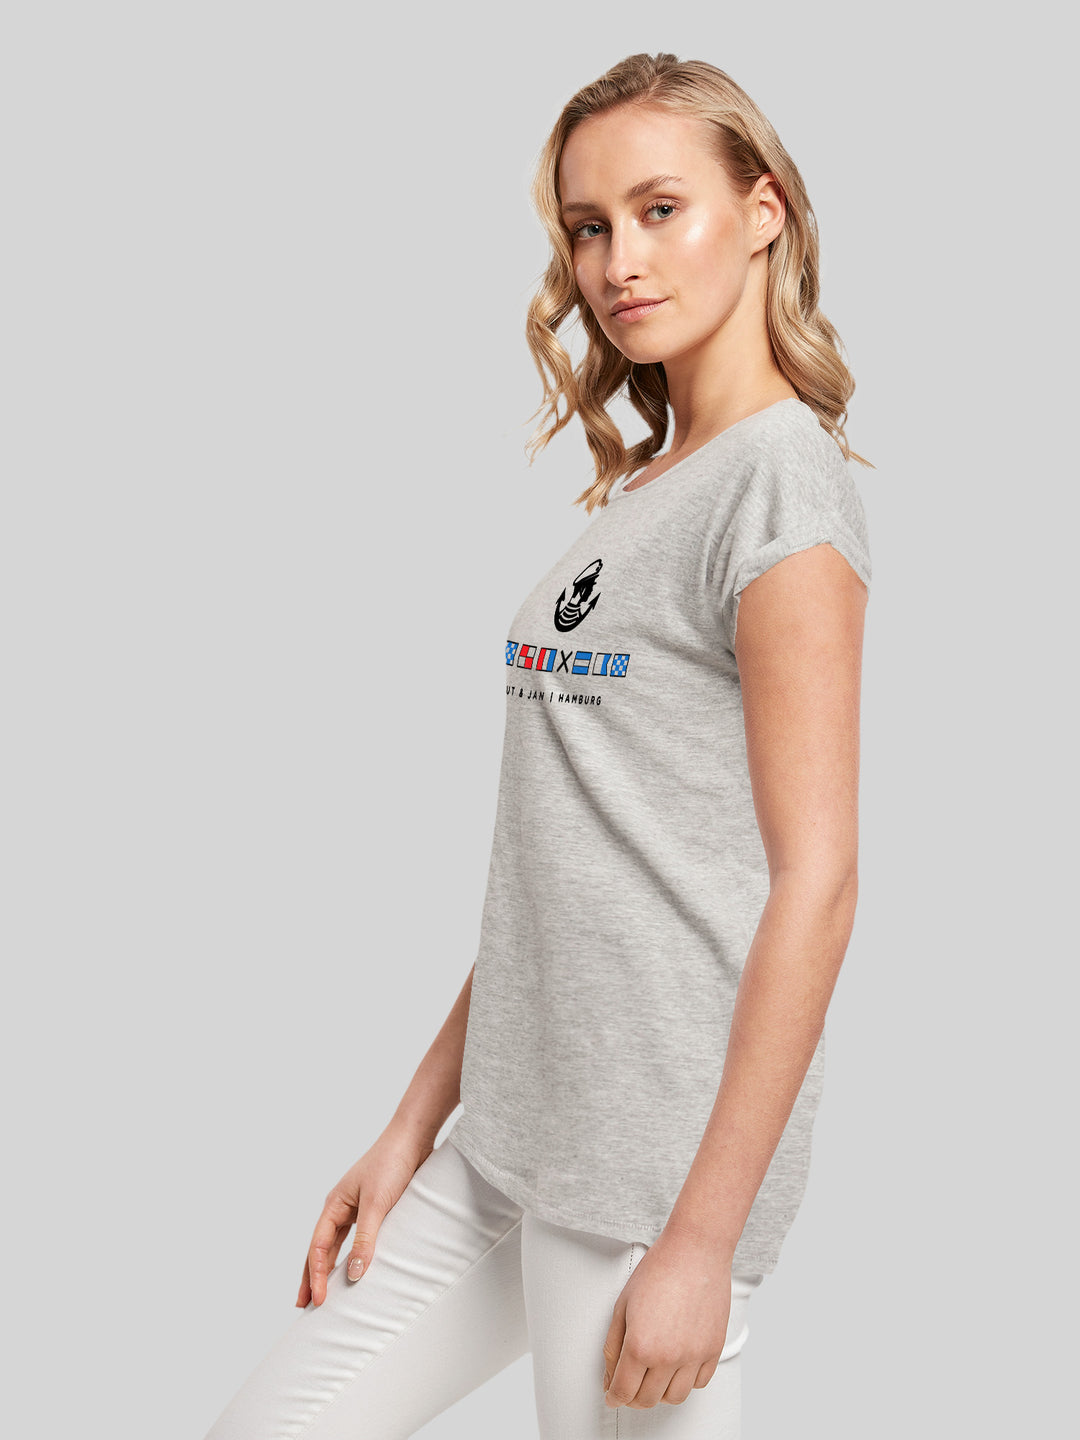 MALIN | T-Shirt Damen Seglerfahnen